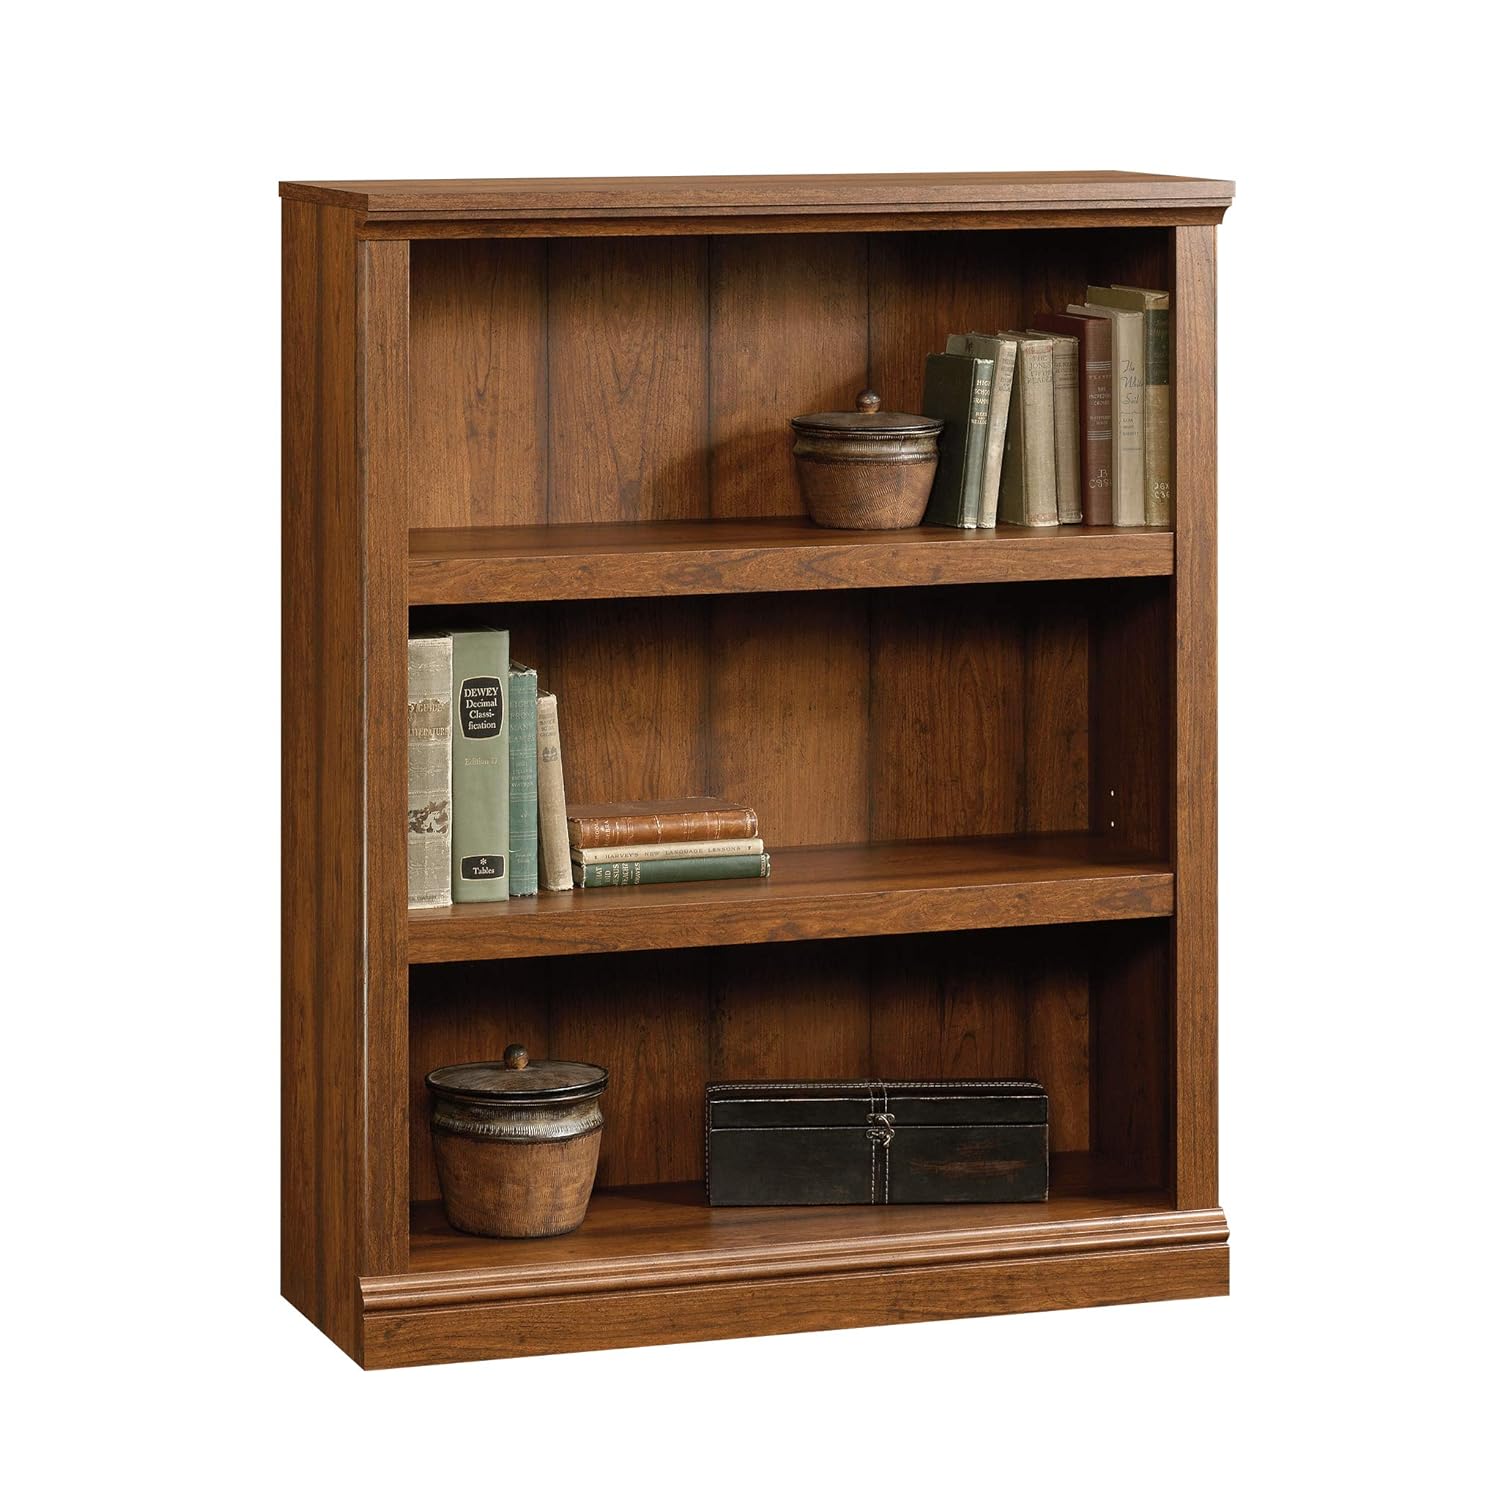 Sauder Select Collection 3-Shelf Bookcase, Washington Cherry finish